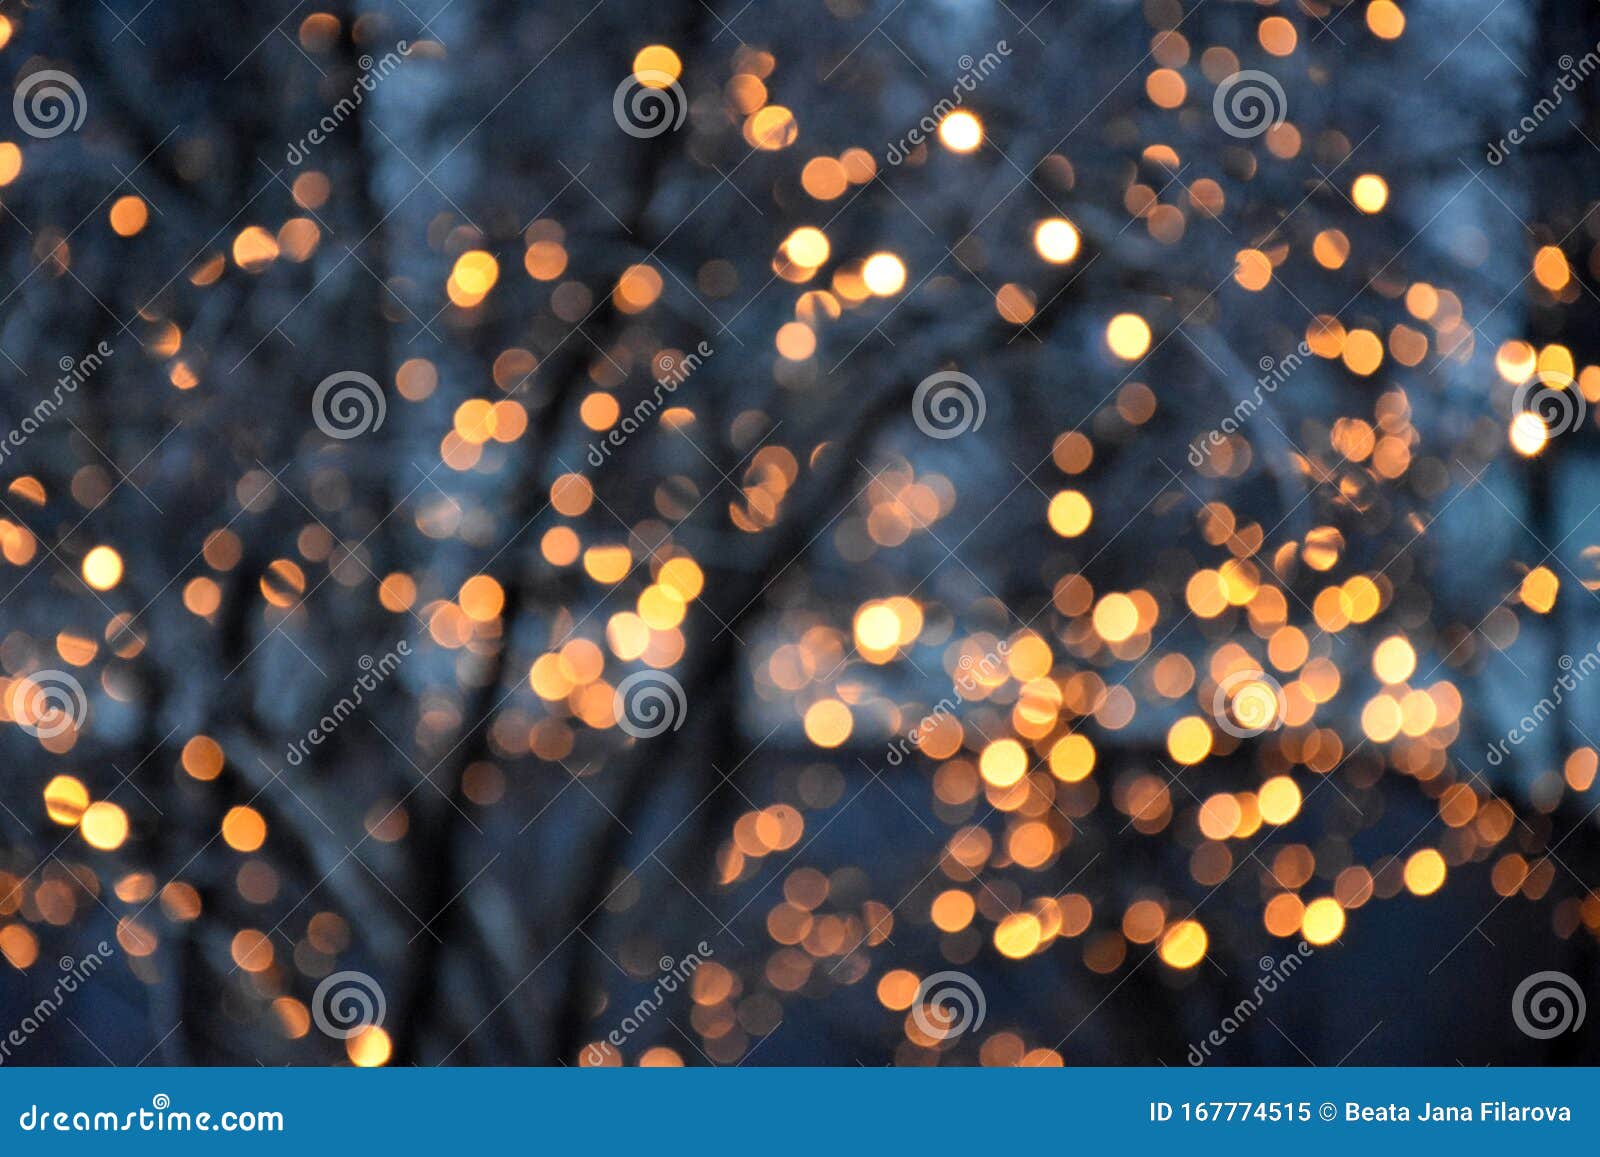 Golden Light Blur Background Stock Images Stock Image - Image of ...